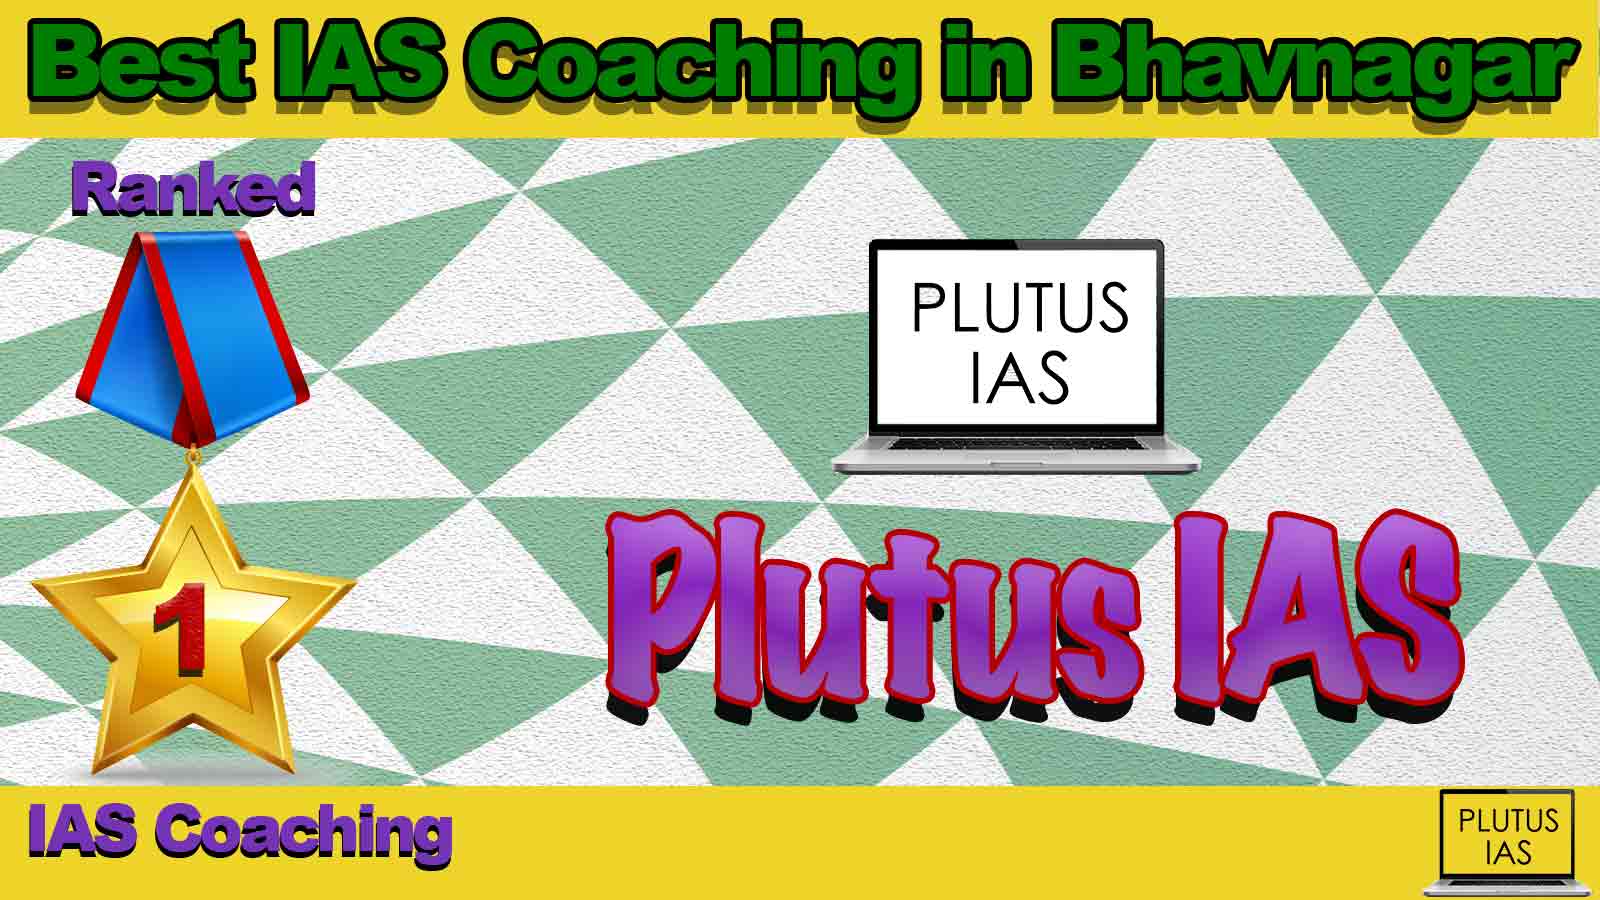 Top IAS Coaching in Bhavnagar